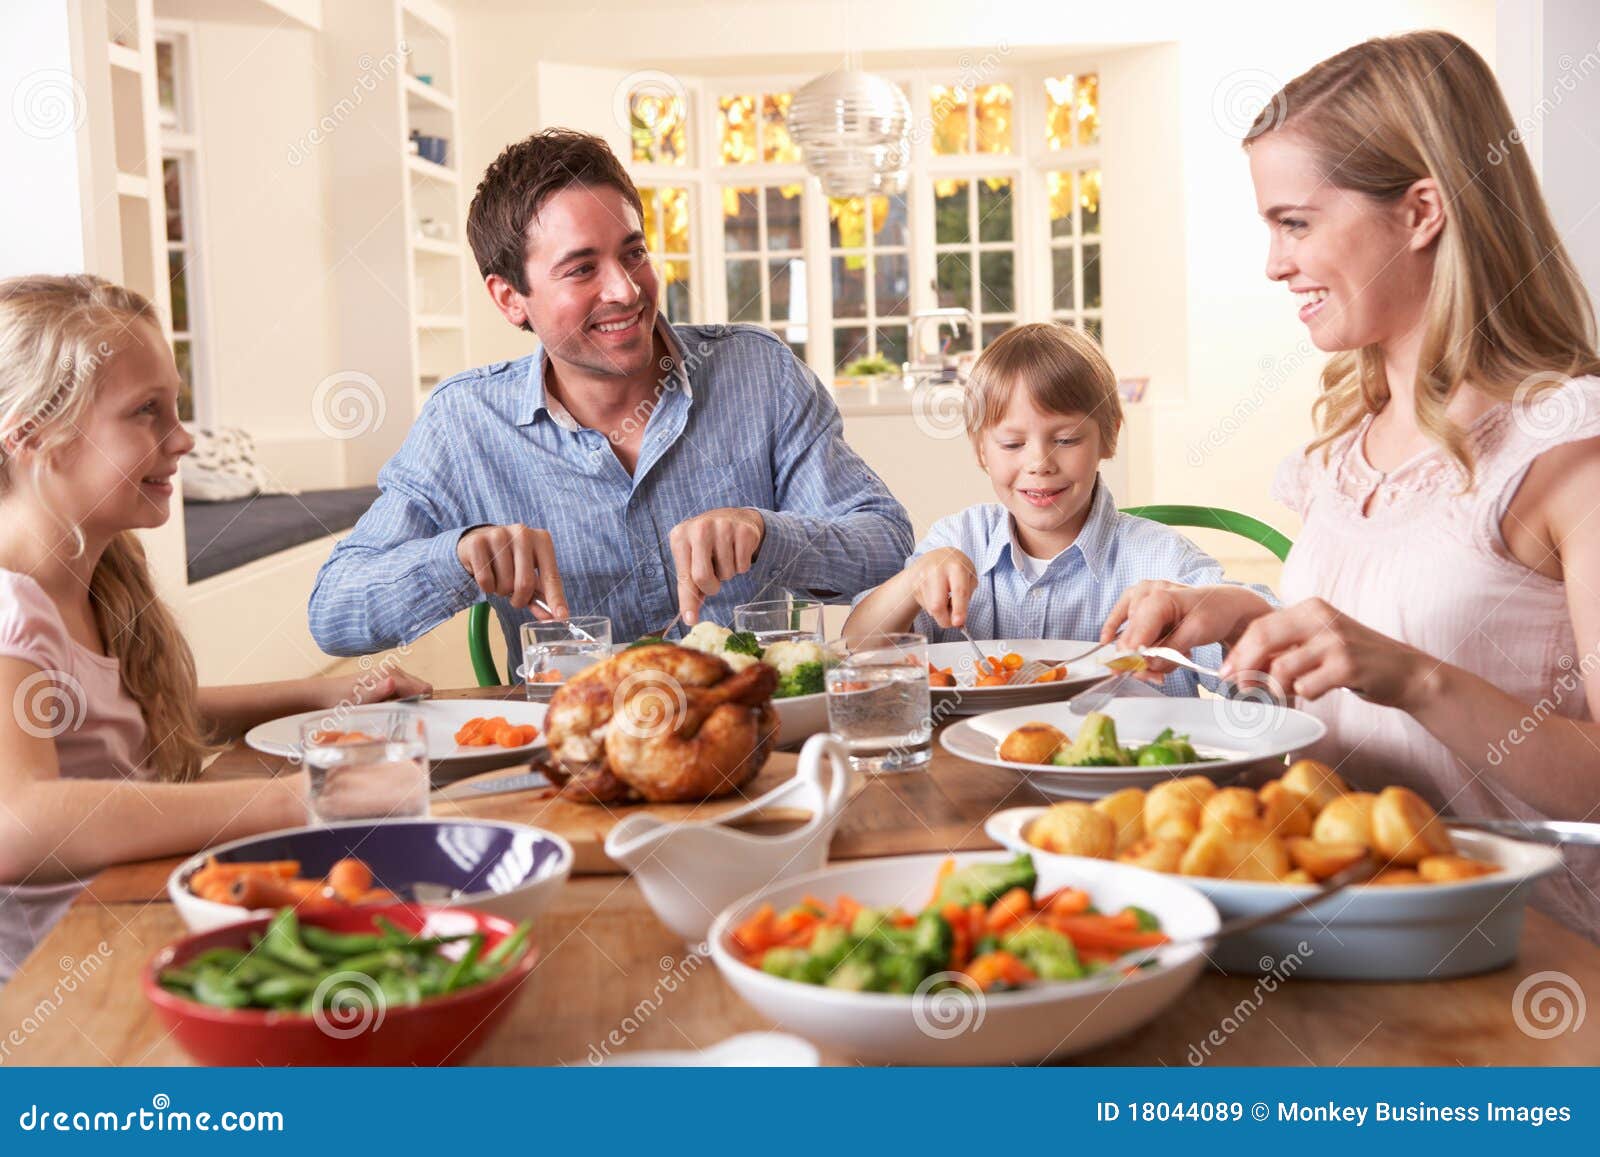 happy family having roast chicken dinner at table